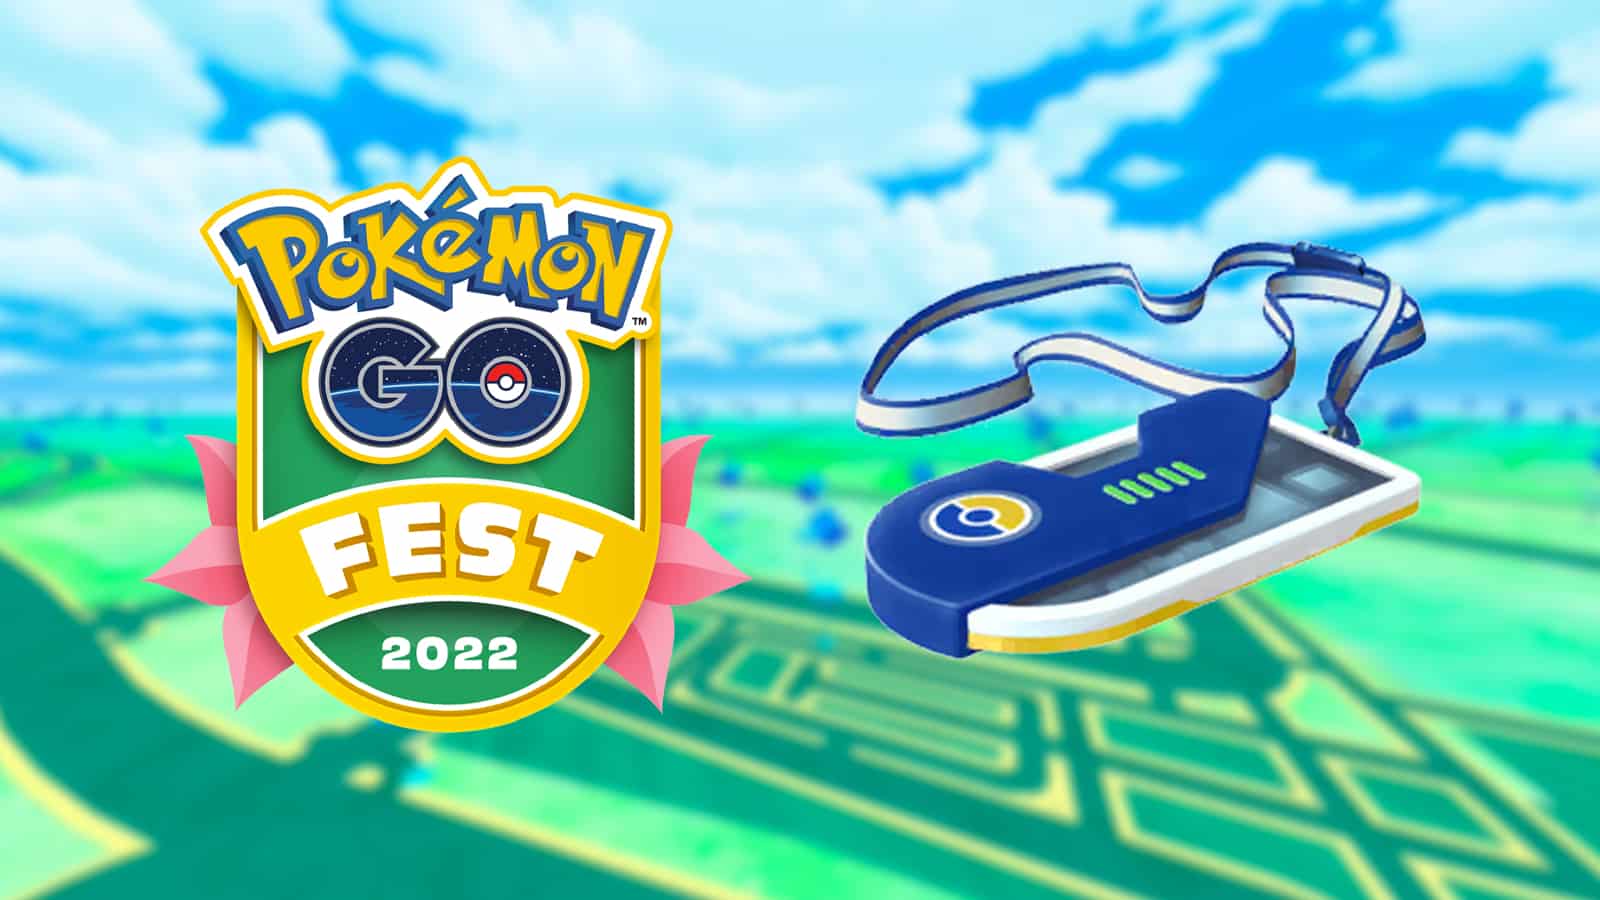 The Pokemon GO Fest 2022 ticket and logo